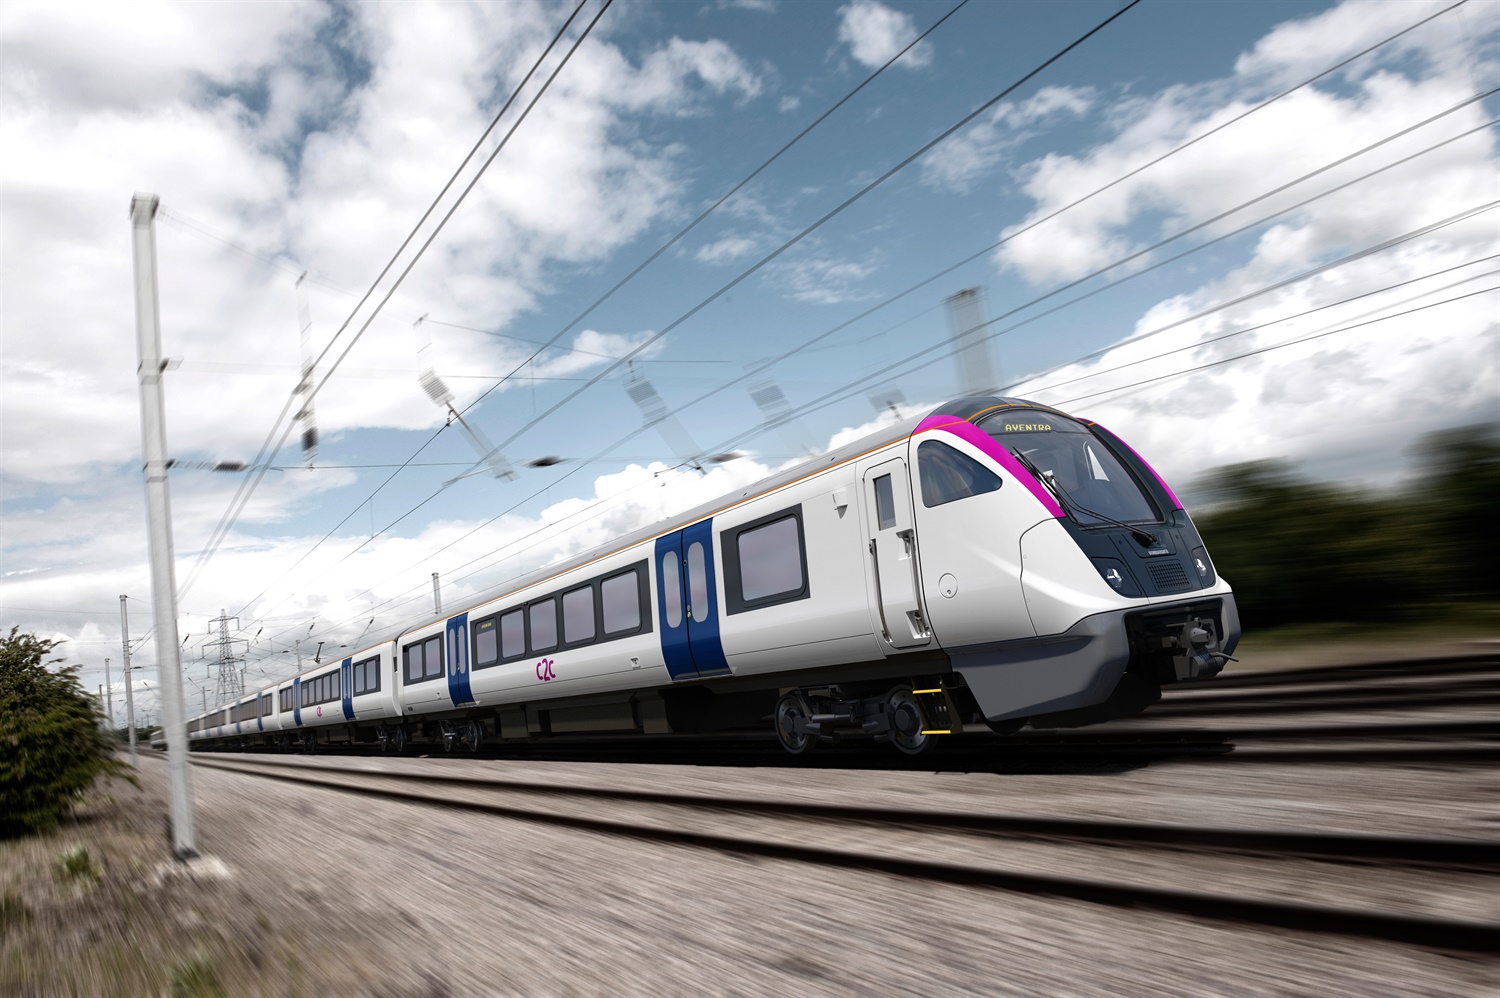 c2c announces £100m train deal with Bombardier